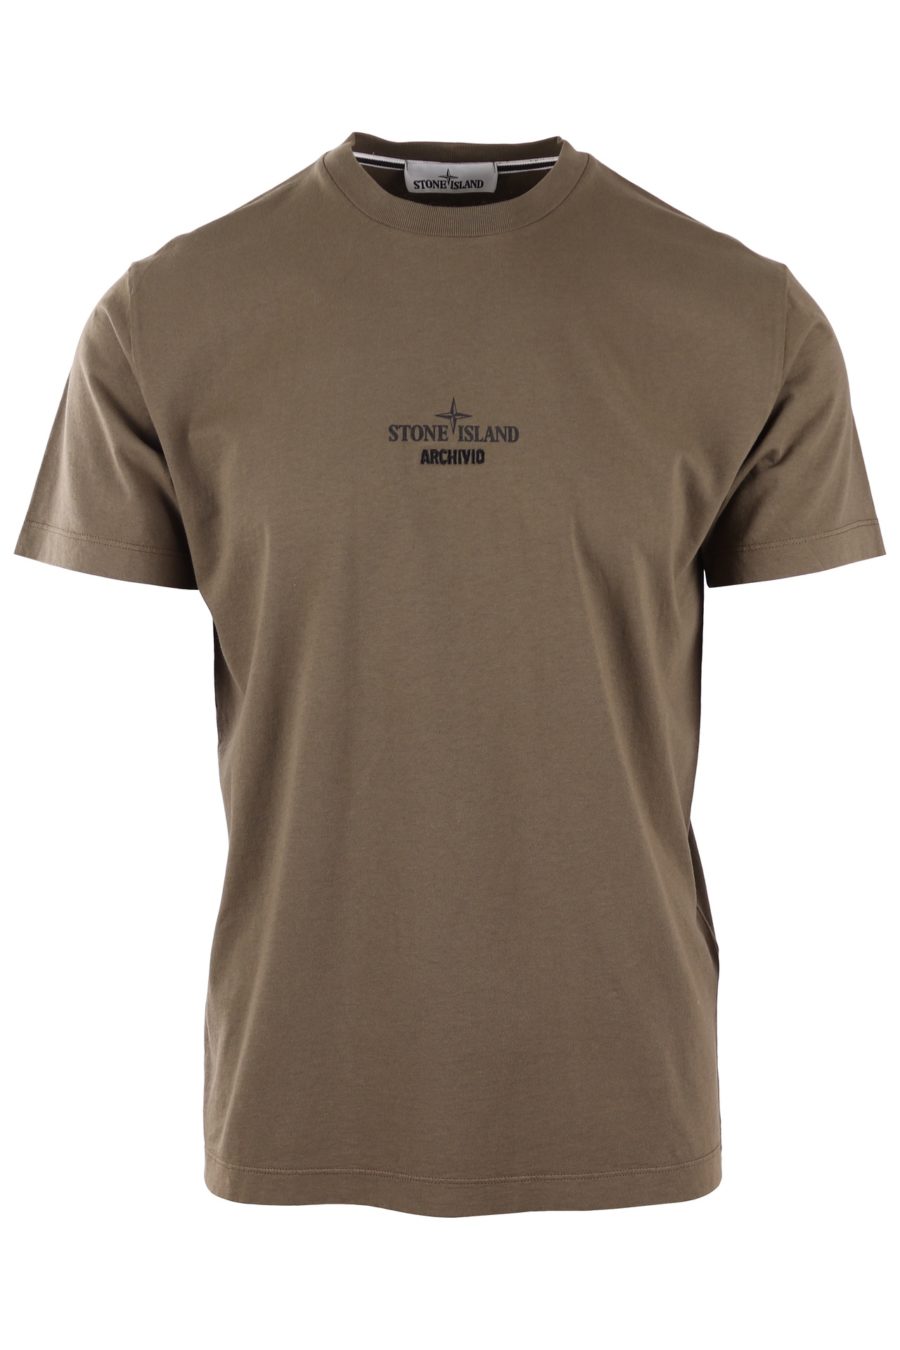 T-shirt Stone Island vert militaire avec logo "archivio" - 8dc94f6327d3864625f3278522f969706e822ce7